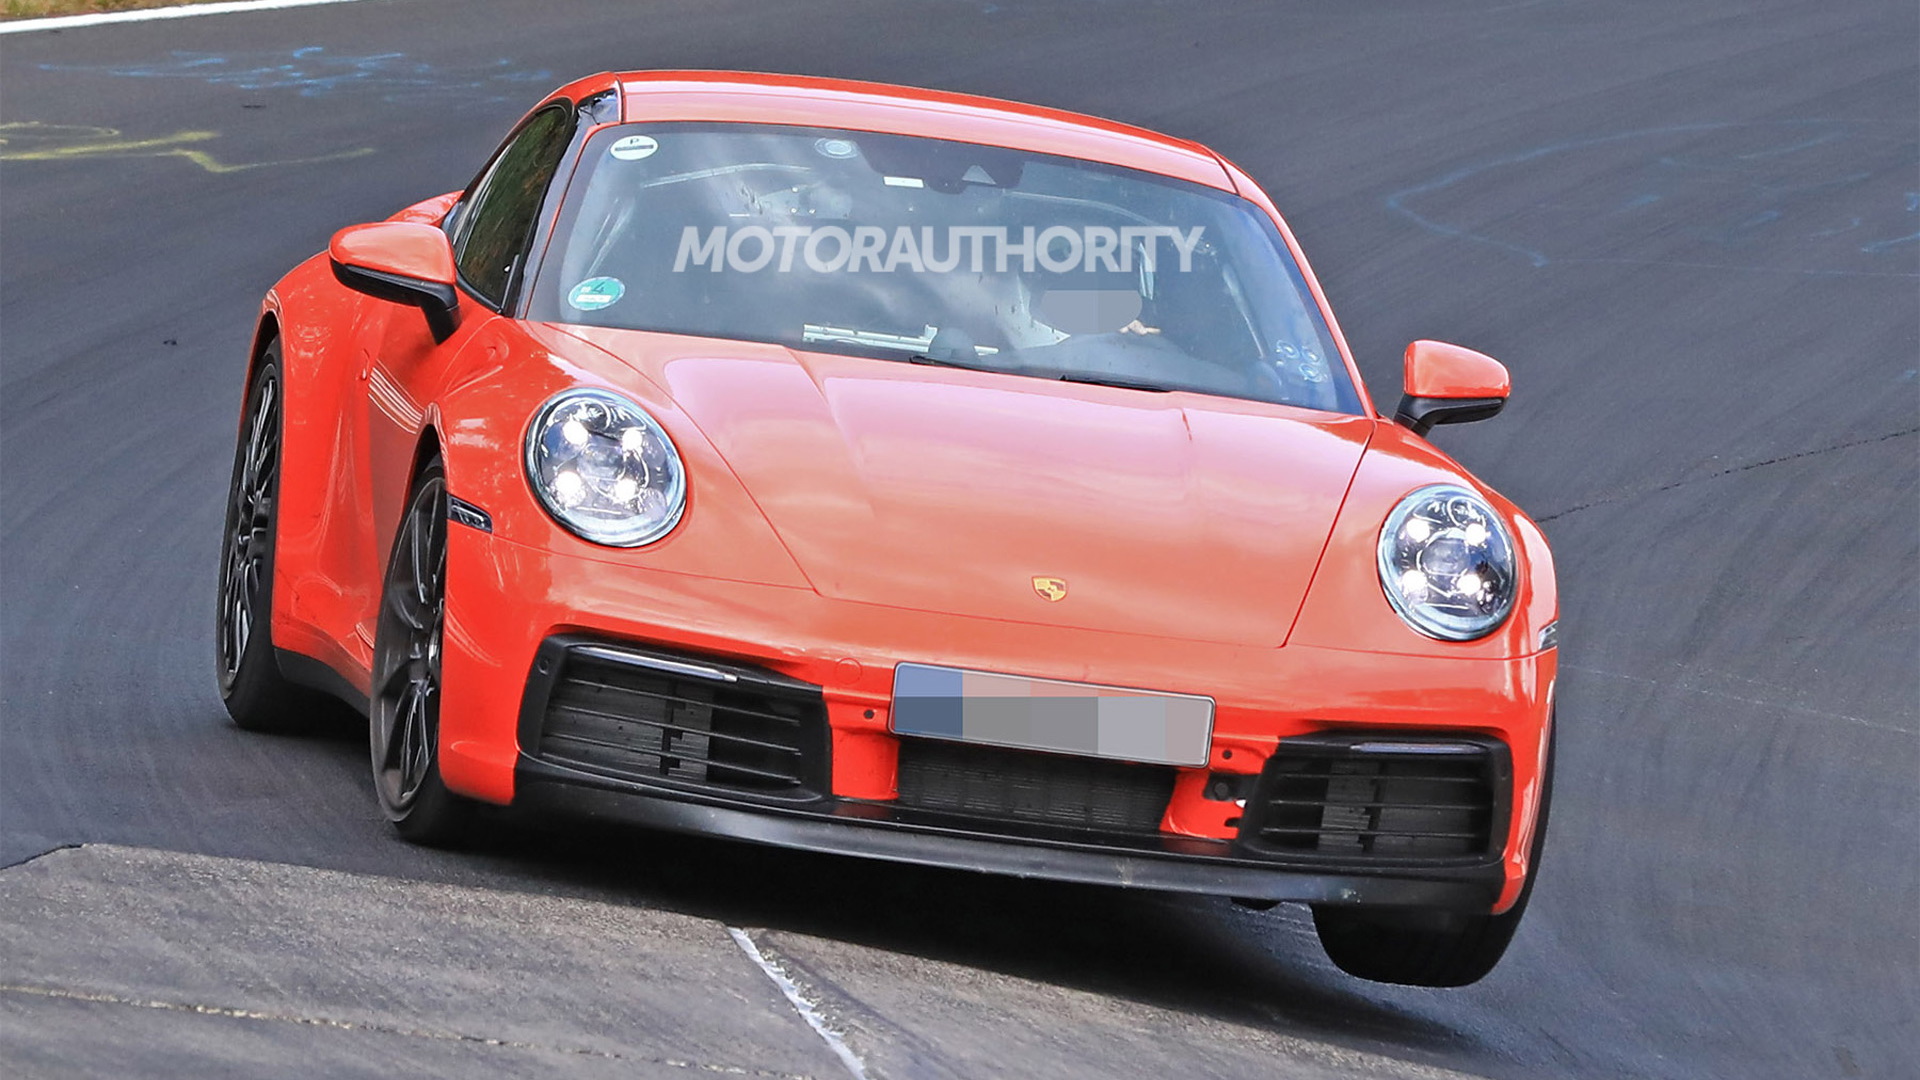 2020 Porsche 911 spy shots - Image via S. Baldauf/SB-Medien